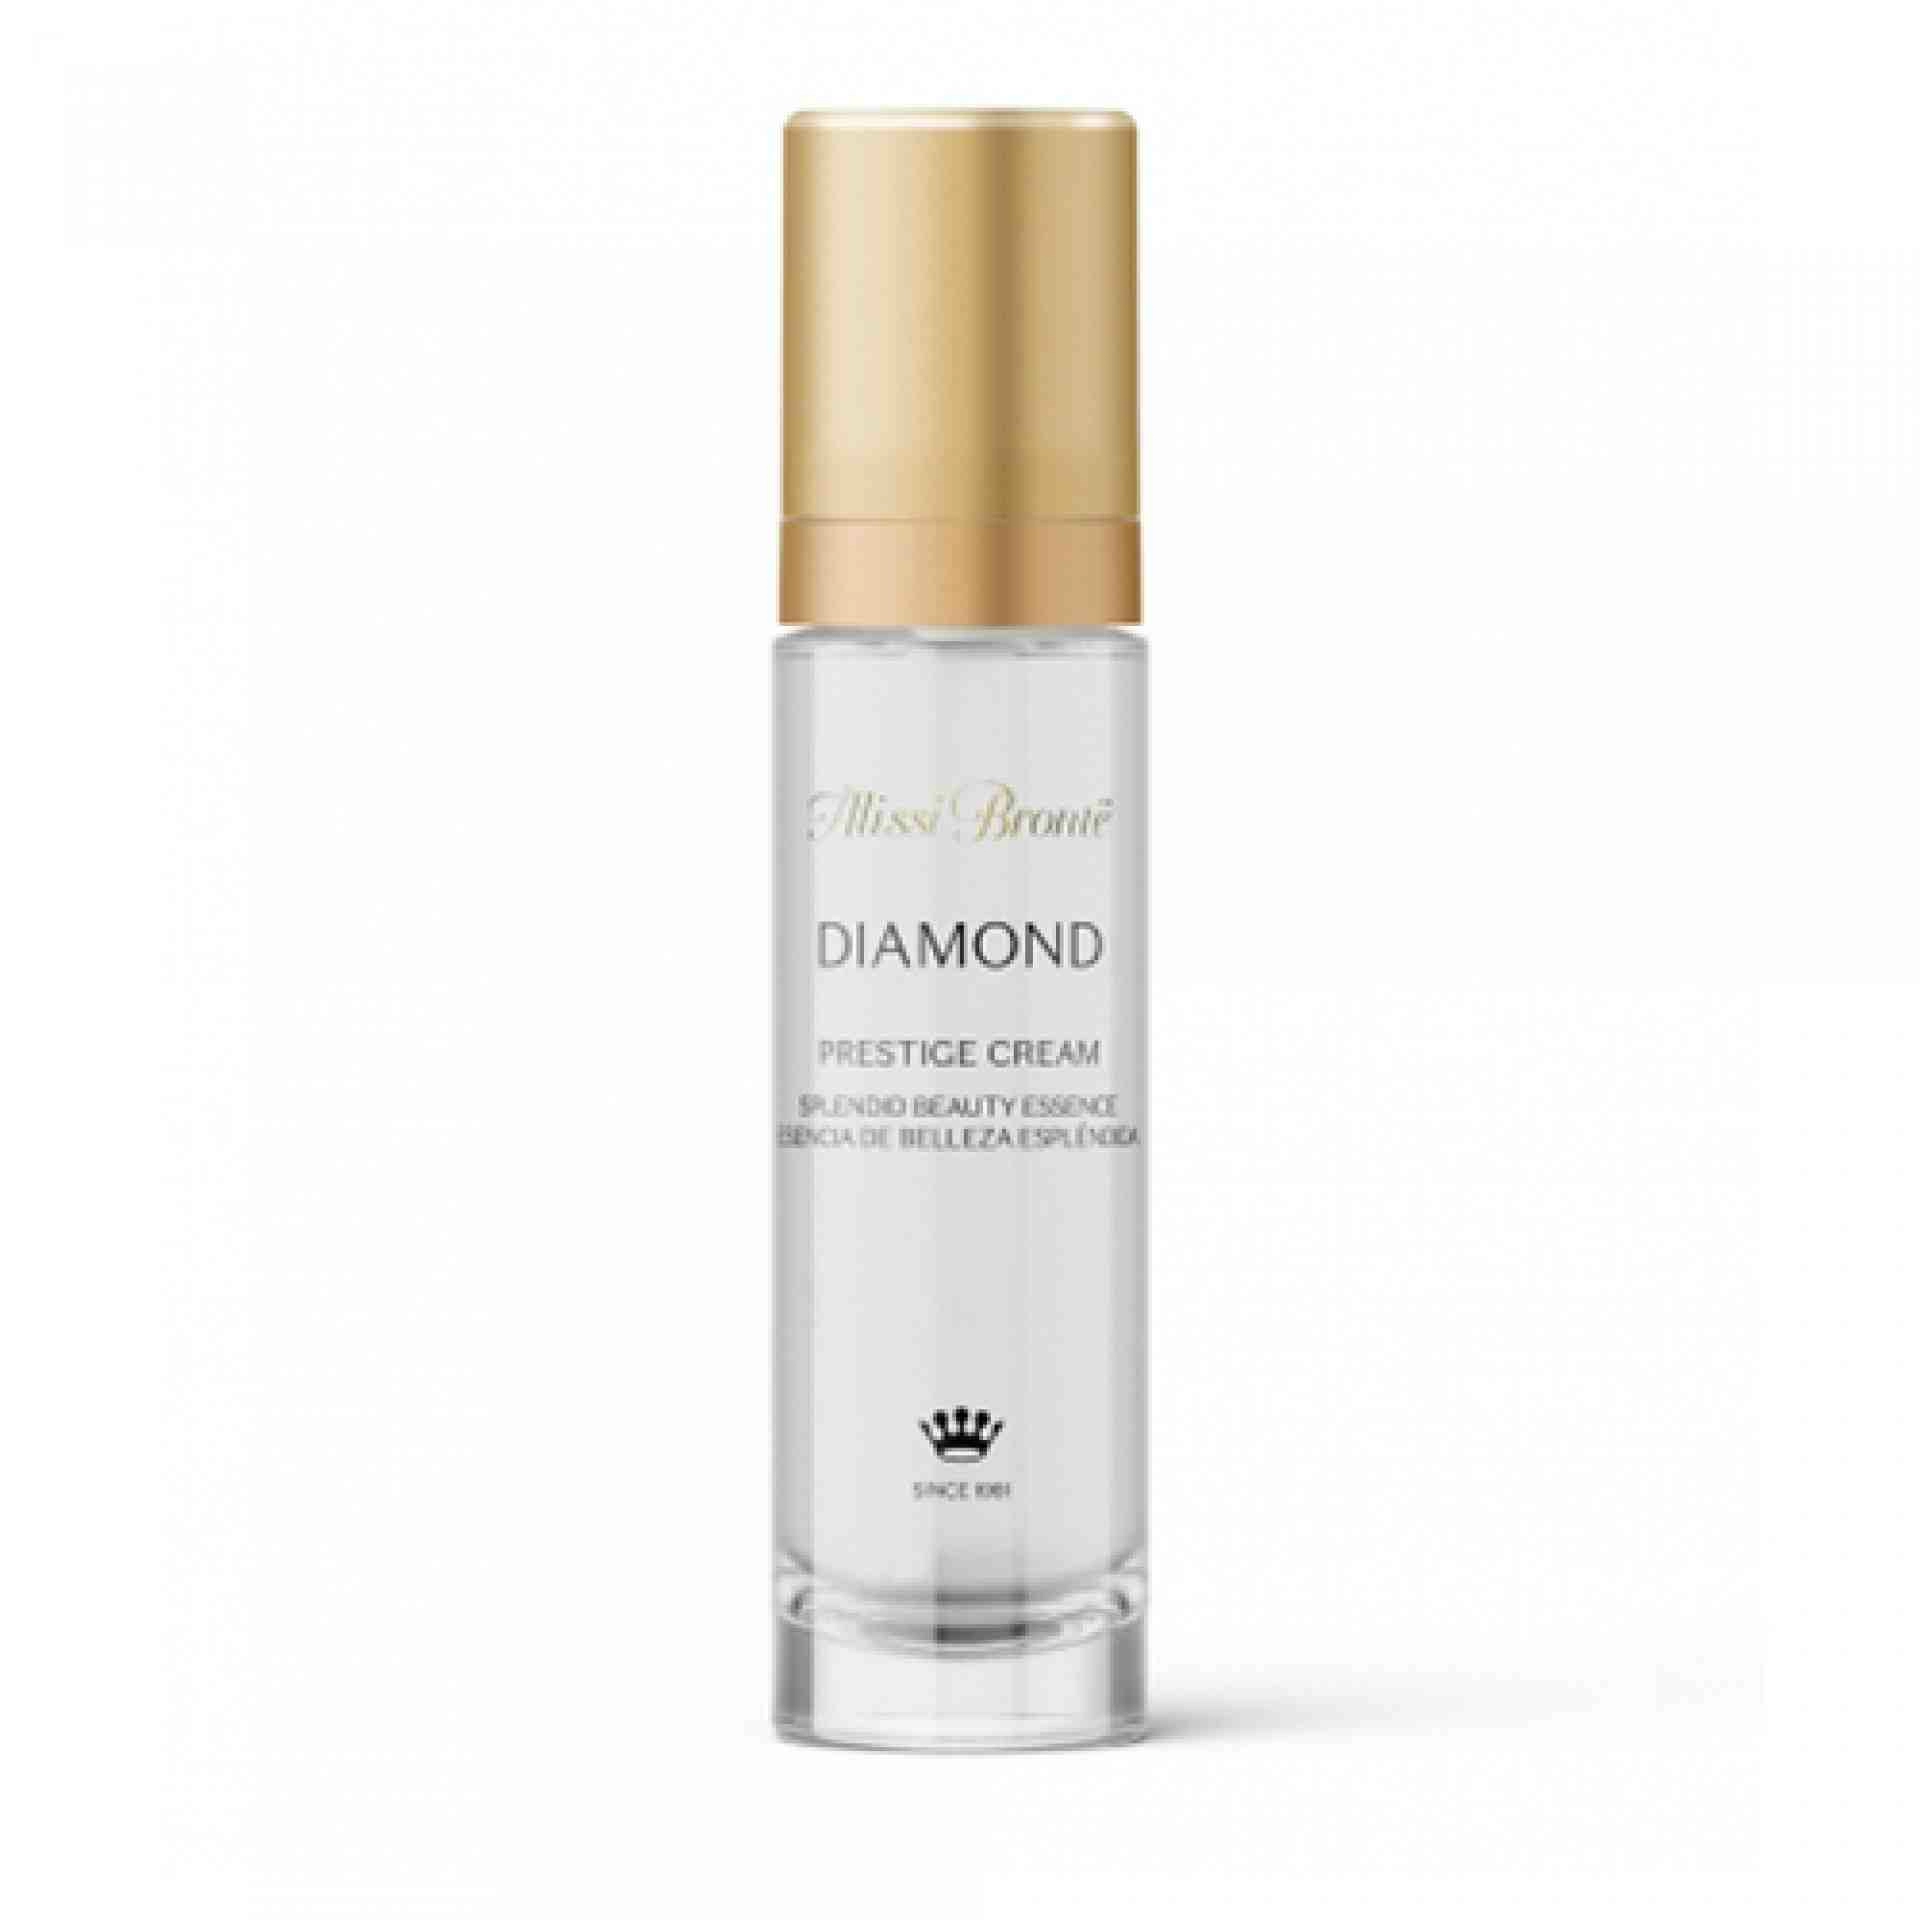 Diamond Prestige Cream I Crema nutritiva 50ml - Diamond Gold - Alissi Brontë ®